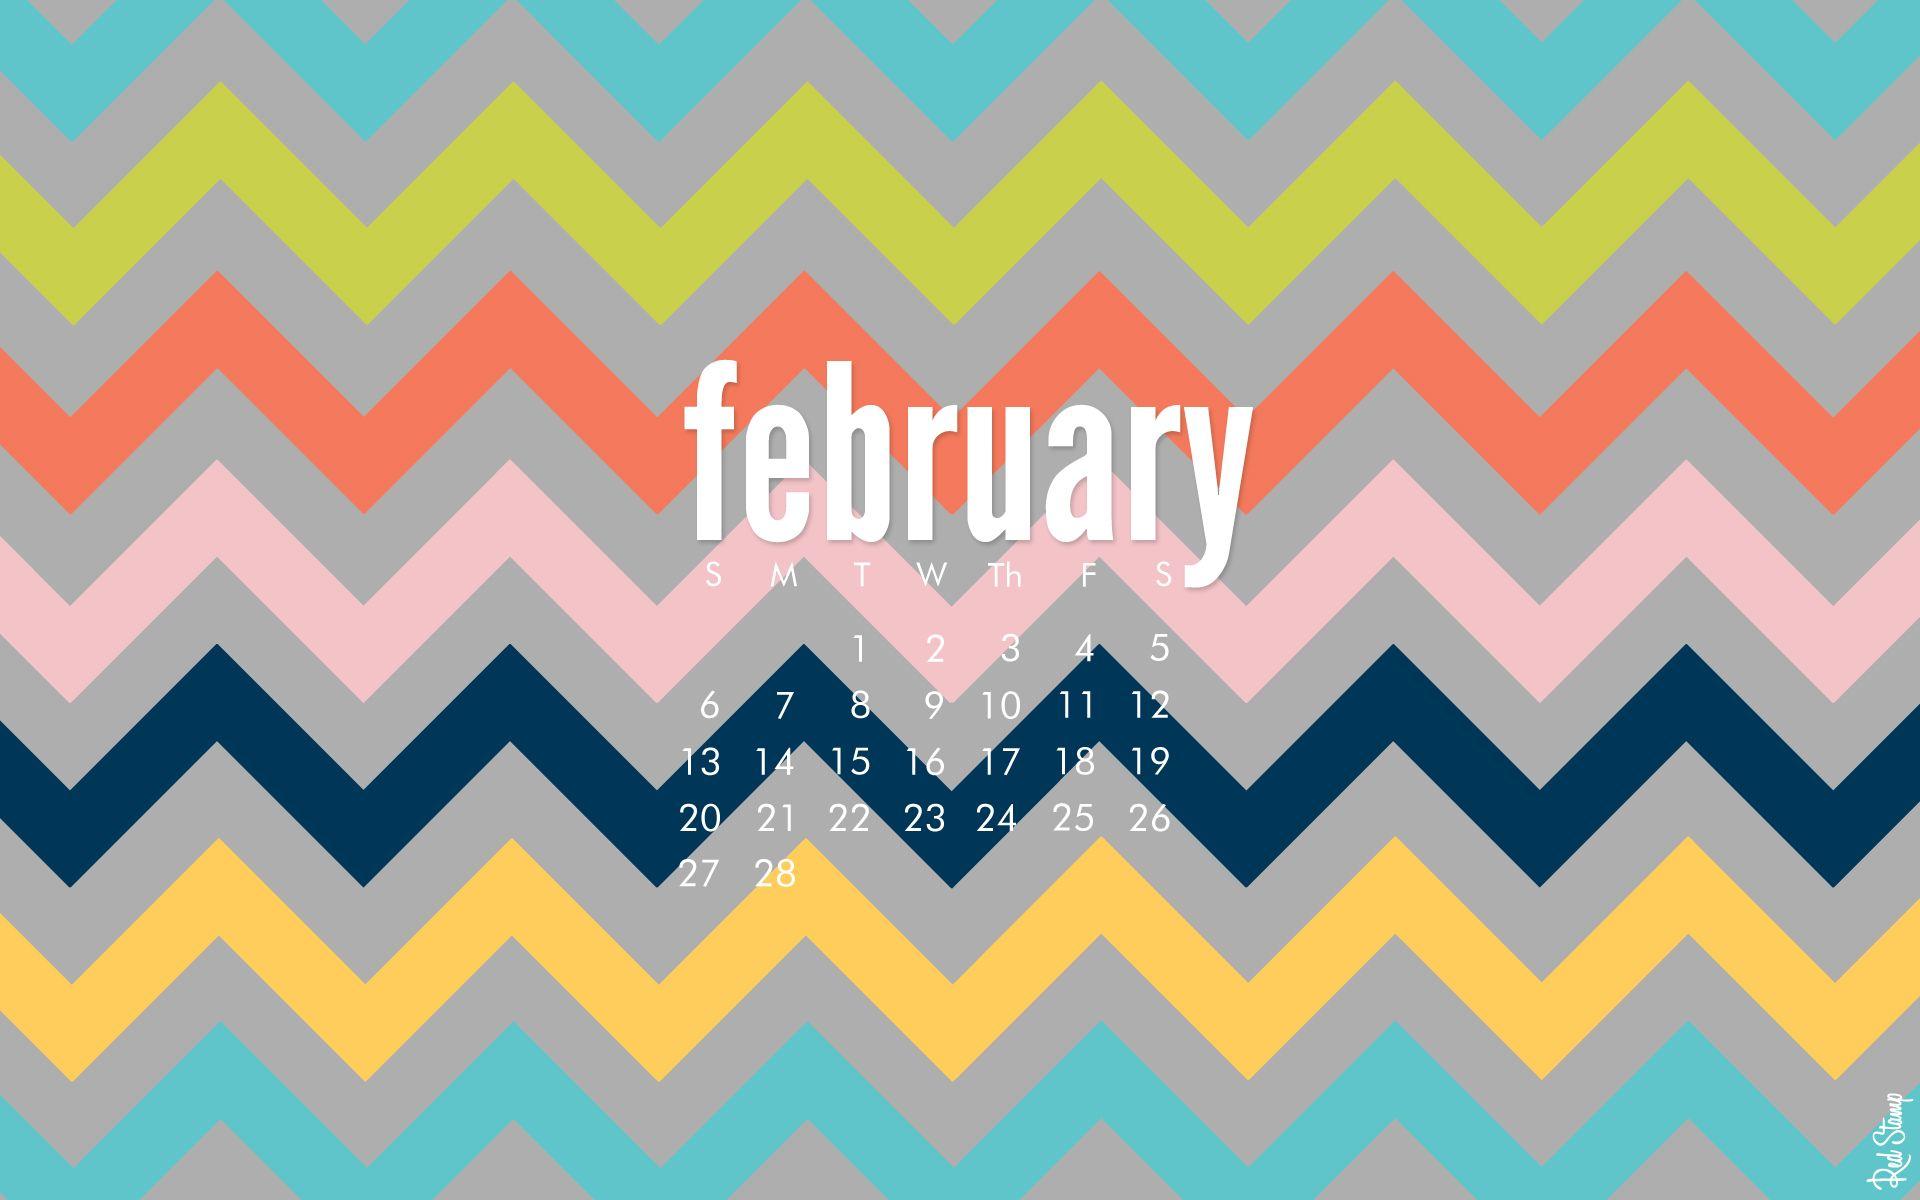 February Desktop Wallpaper Calendar By Keanarts D Tvejp